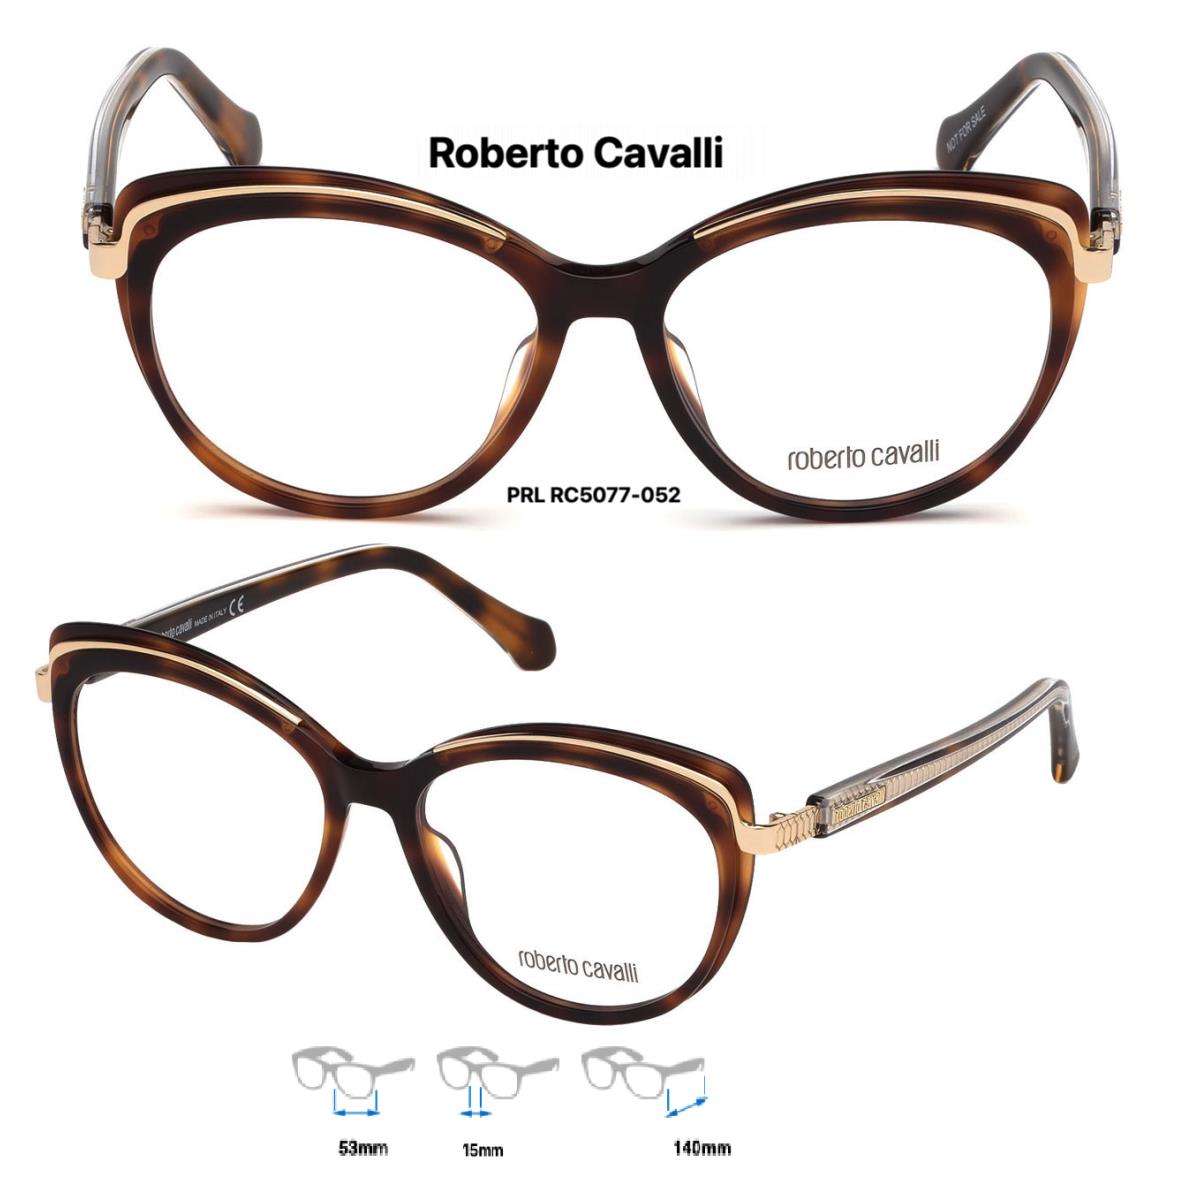 Roberto Cavalli Mulazzo RC5077-052 Eyeglass Frames Havana/gold Size 53mm